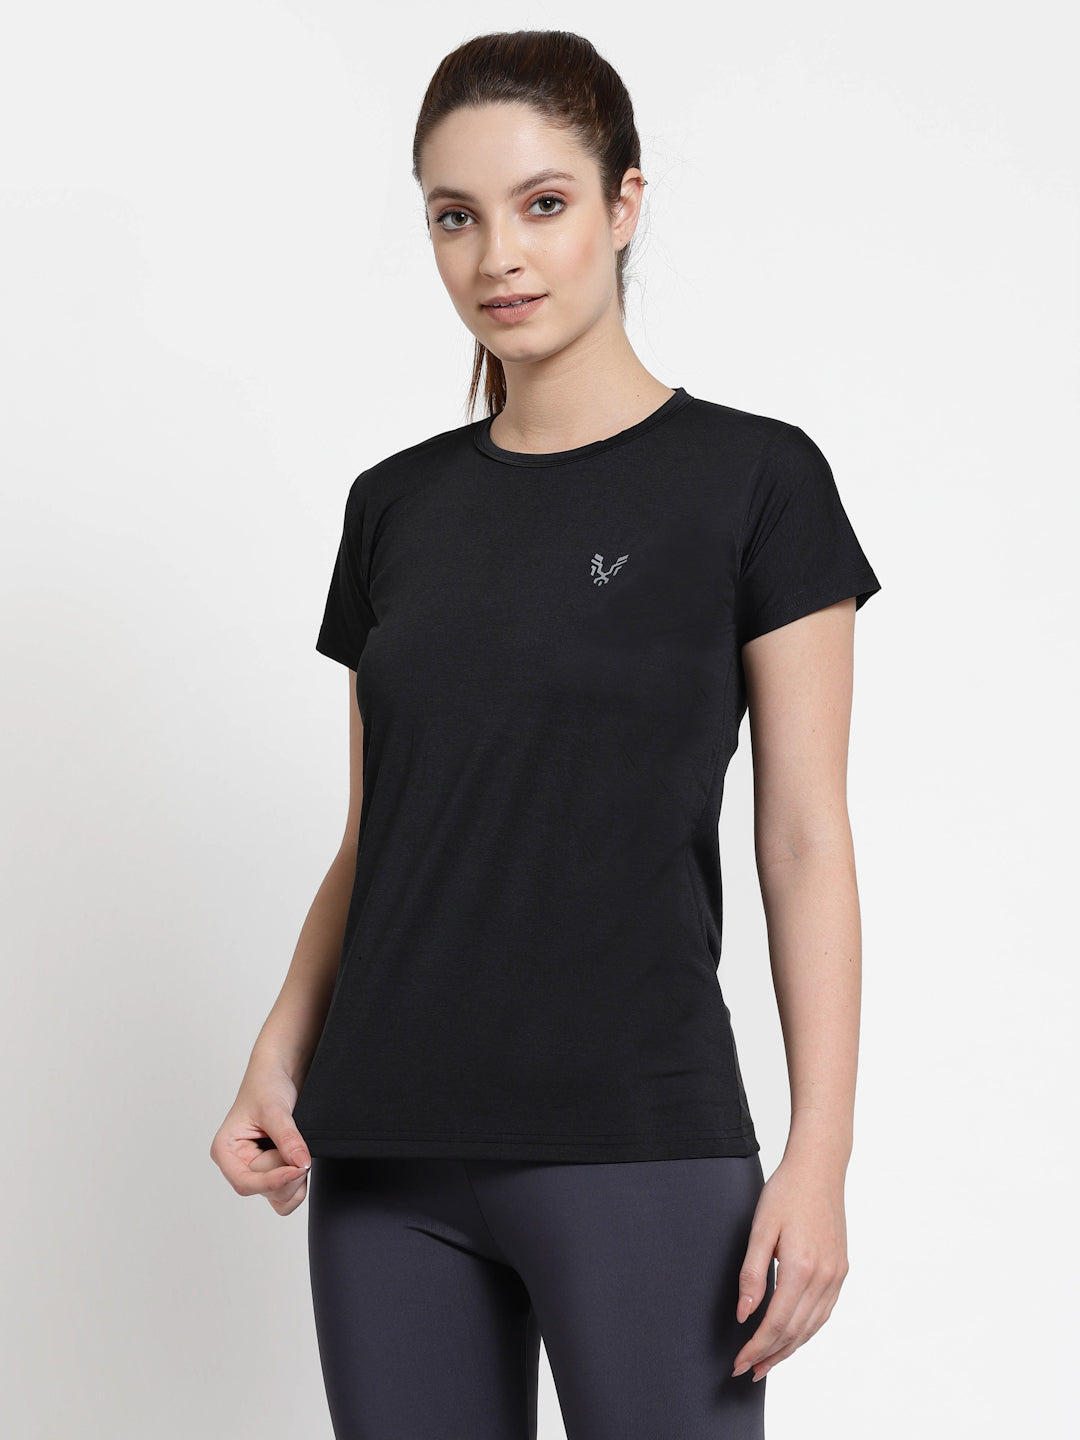 Women's Gym Tops, Shop Gym T-Shirts For Women